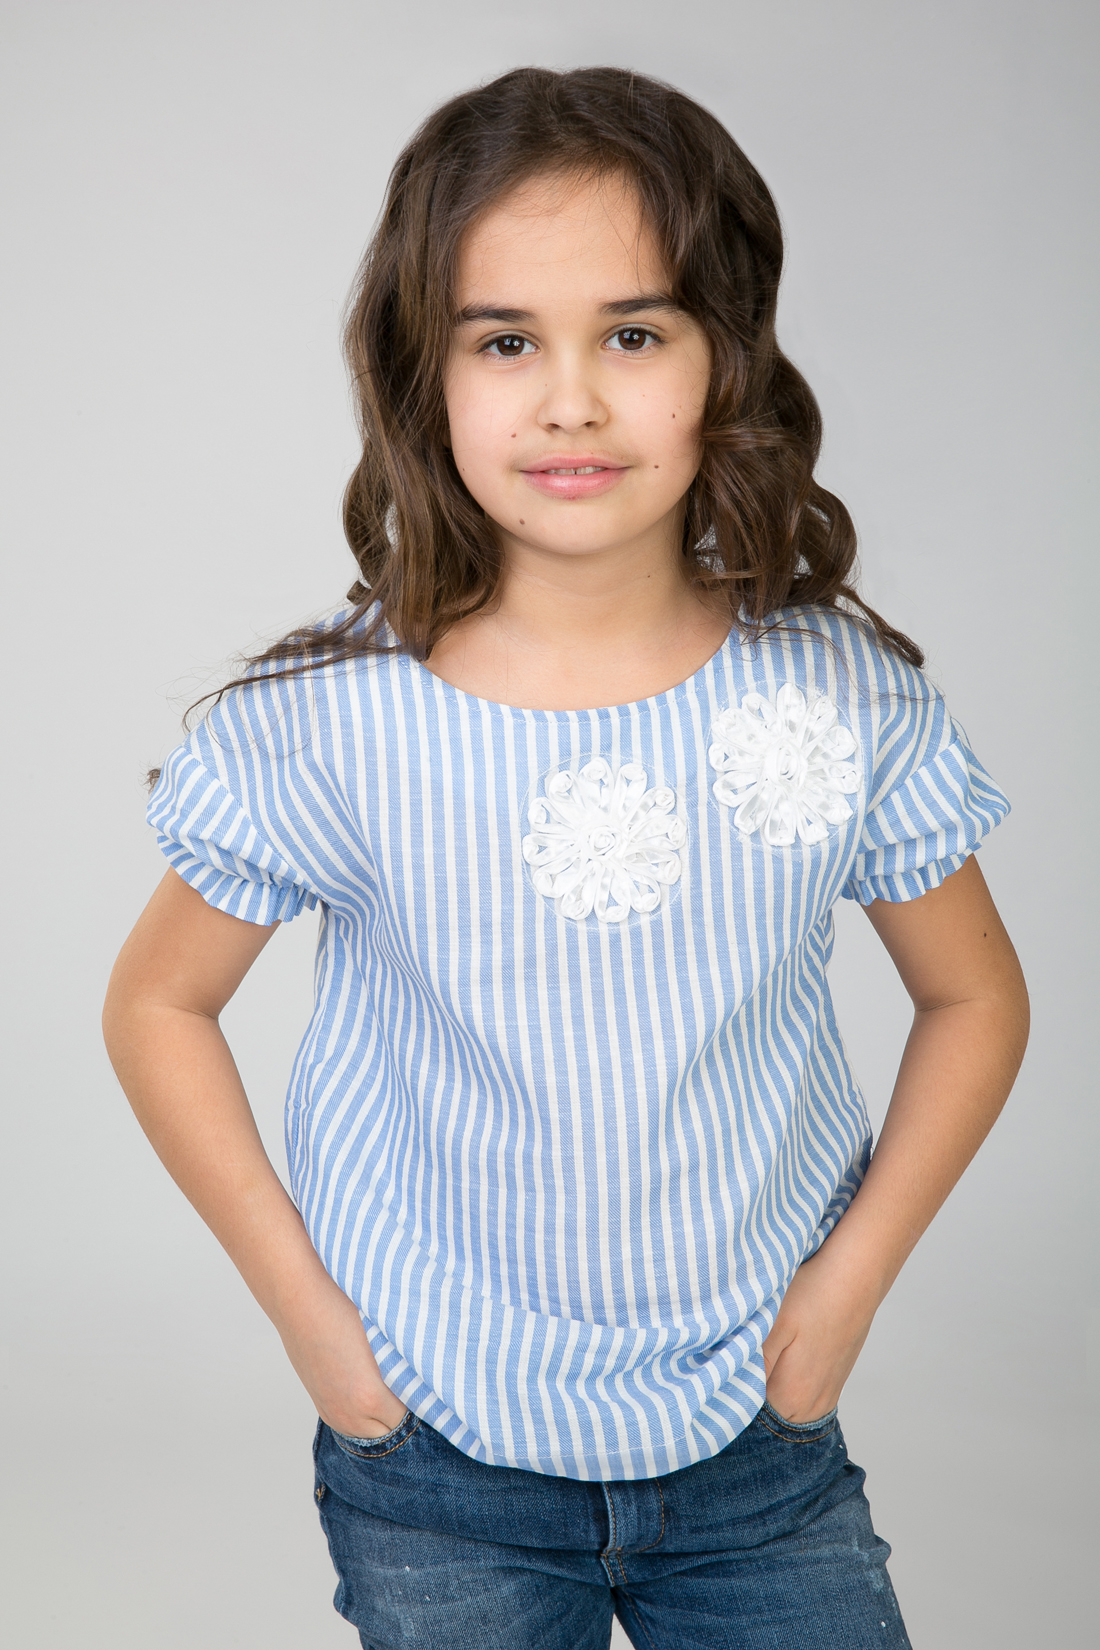 Блузка для девочки (арт. baon BJ198002), размер 134-140, цвет angel blue striped#голубой